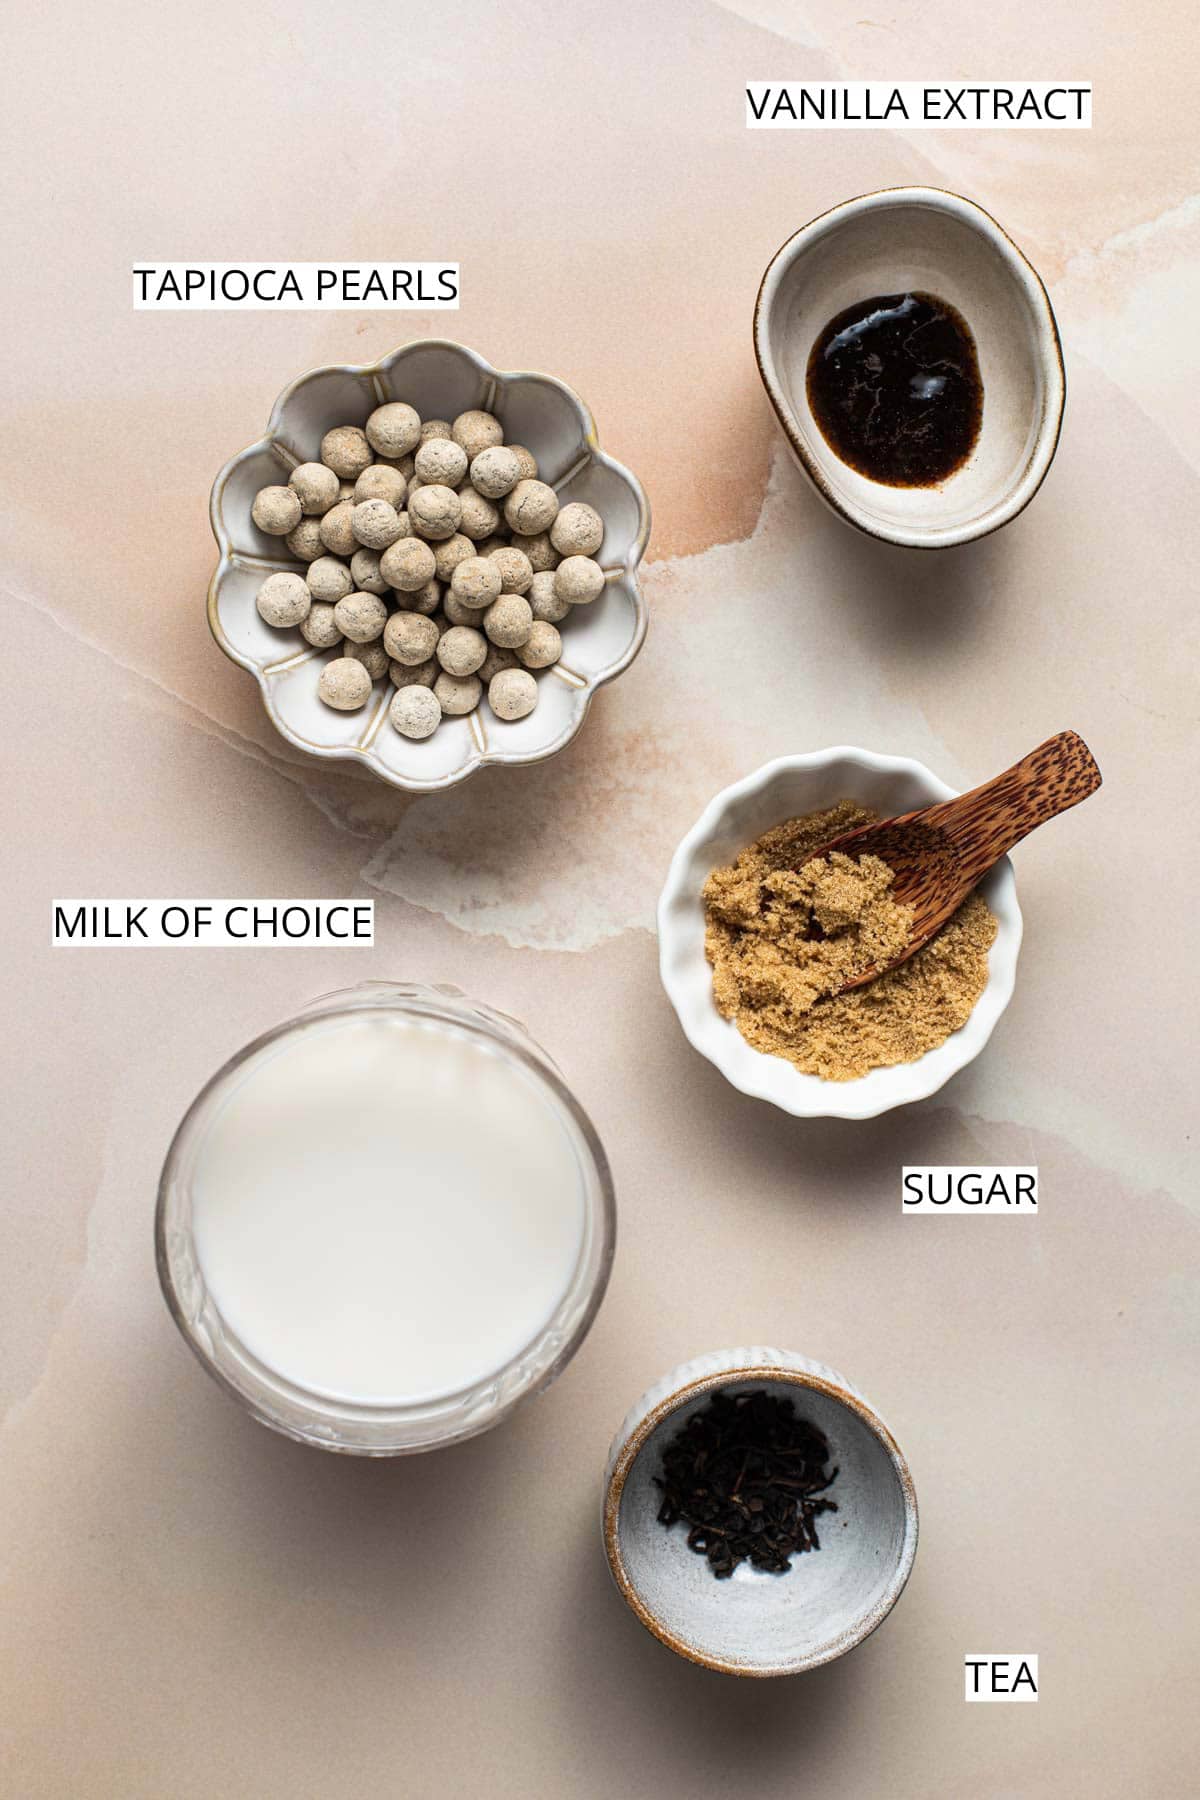 Vanilla, sugar, tea, milk and tapioca pearls on a flat surface.